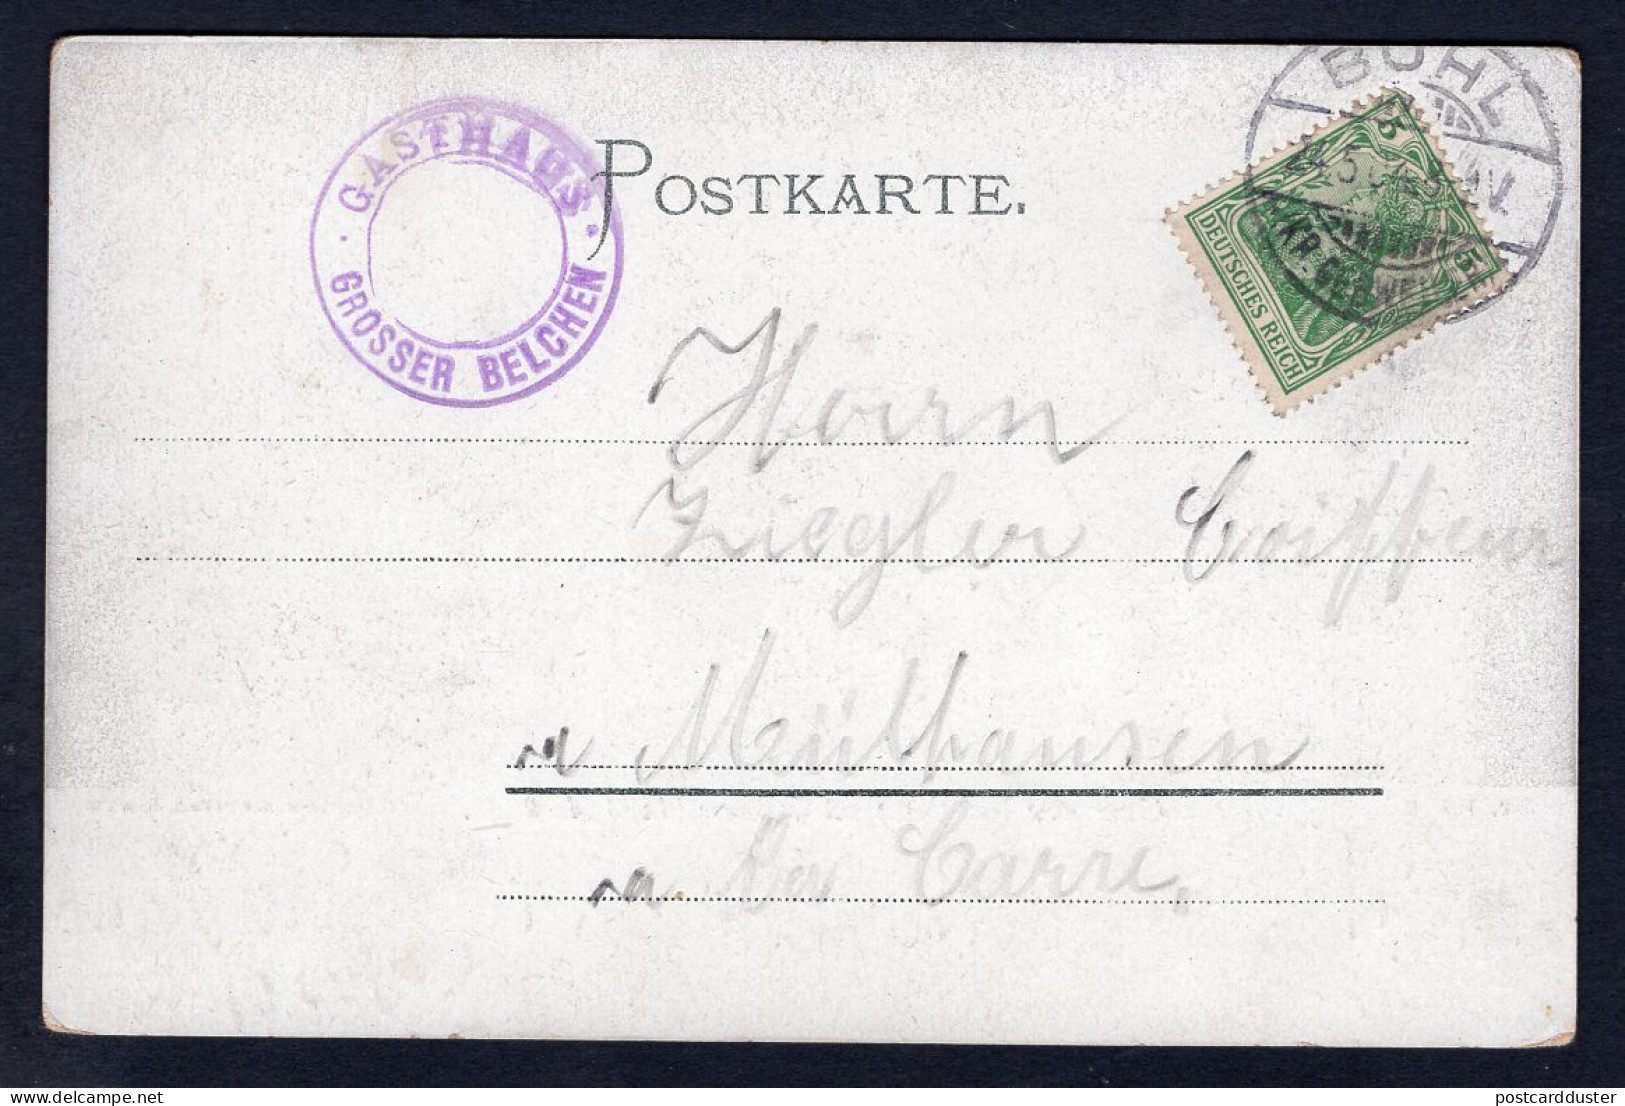 GERMANY Elsass FRANCE Alsace 1904 Gasthaus Grosser Belchen (h20) - Elsass